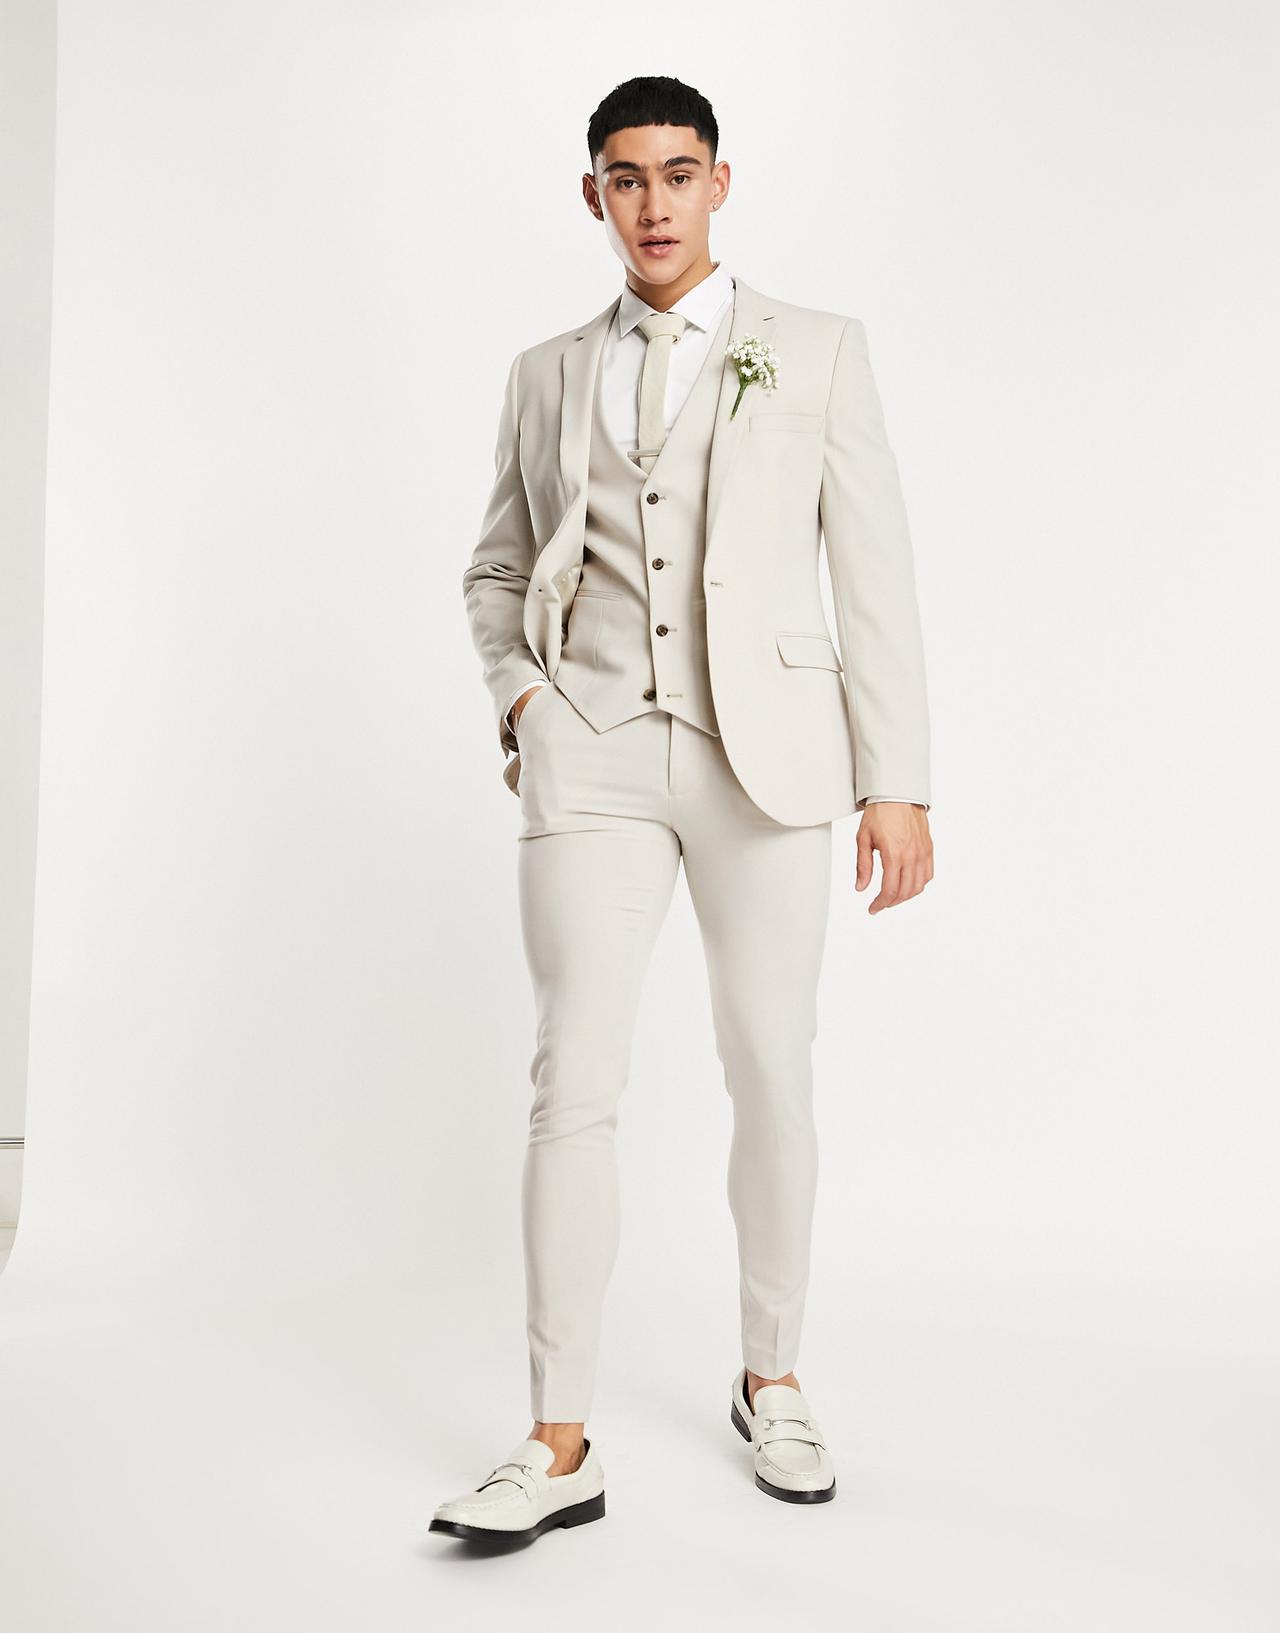 White Wedding Suits & Groom's Tuxedos | Gentleman's Guru